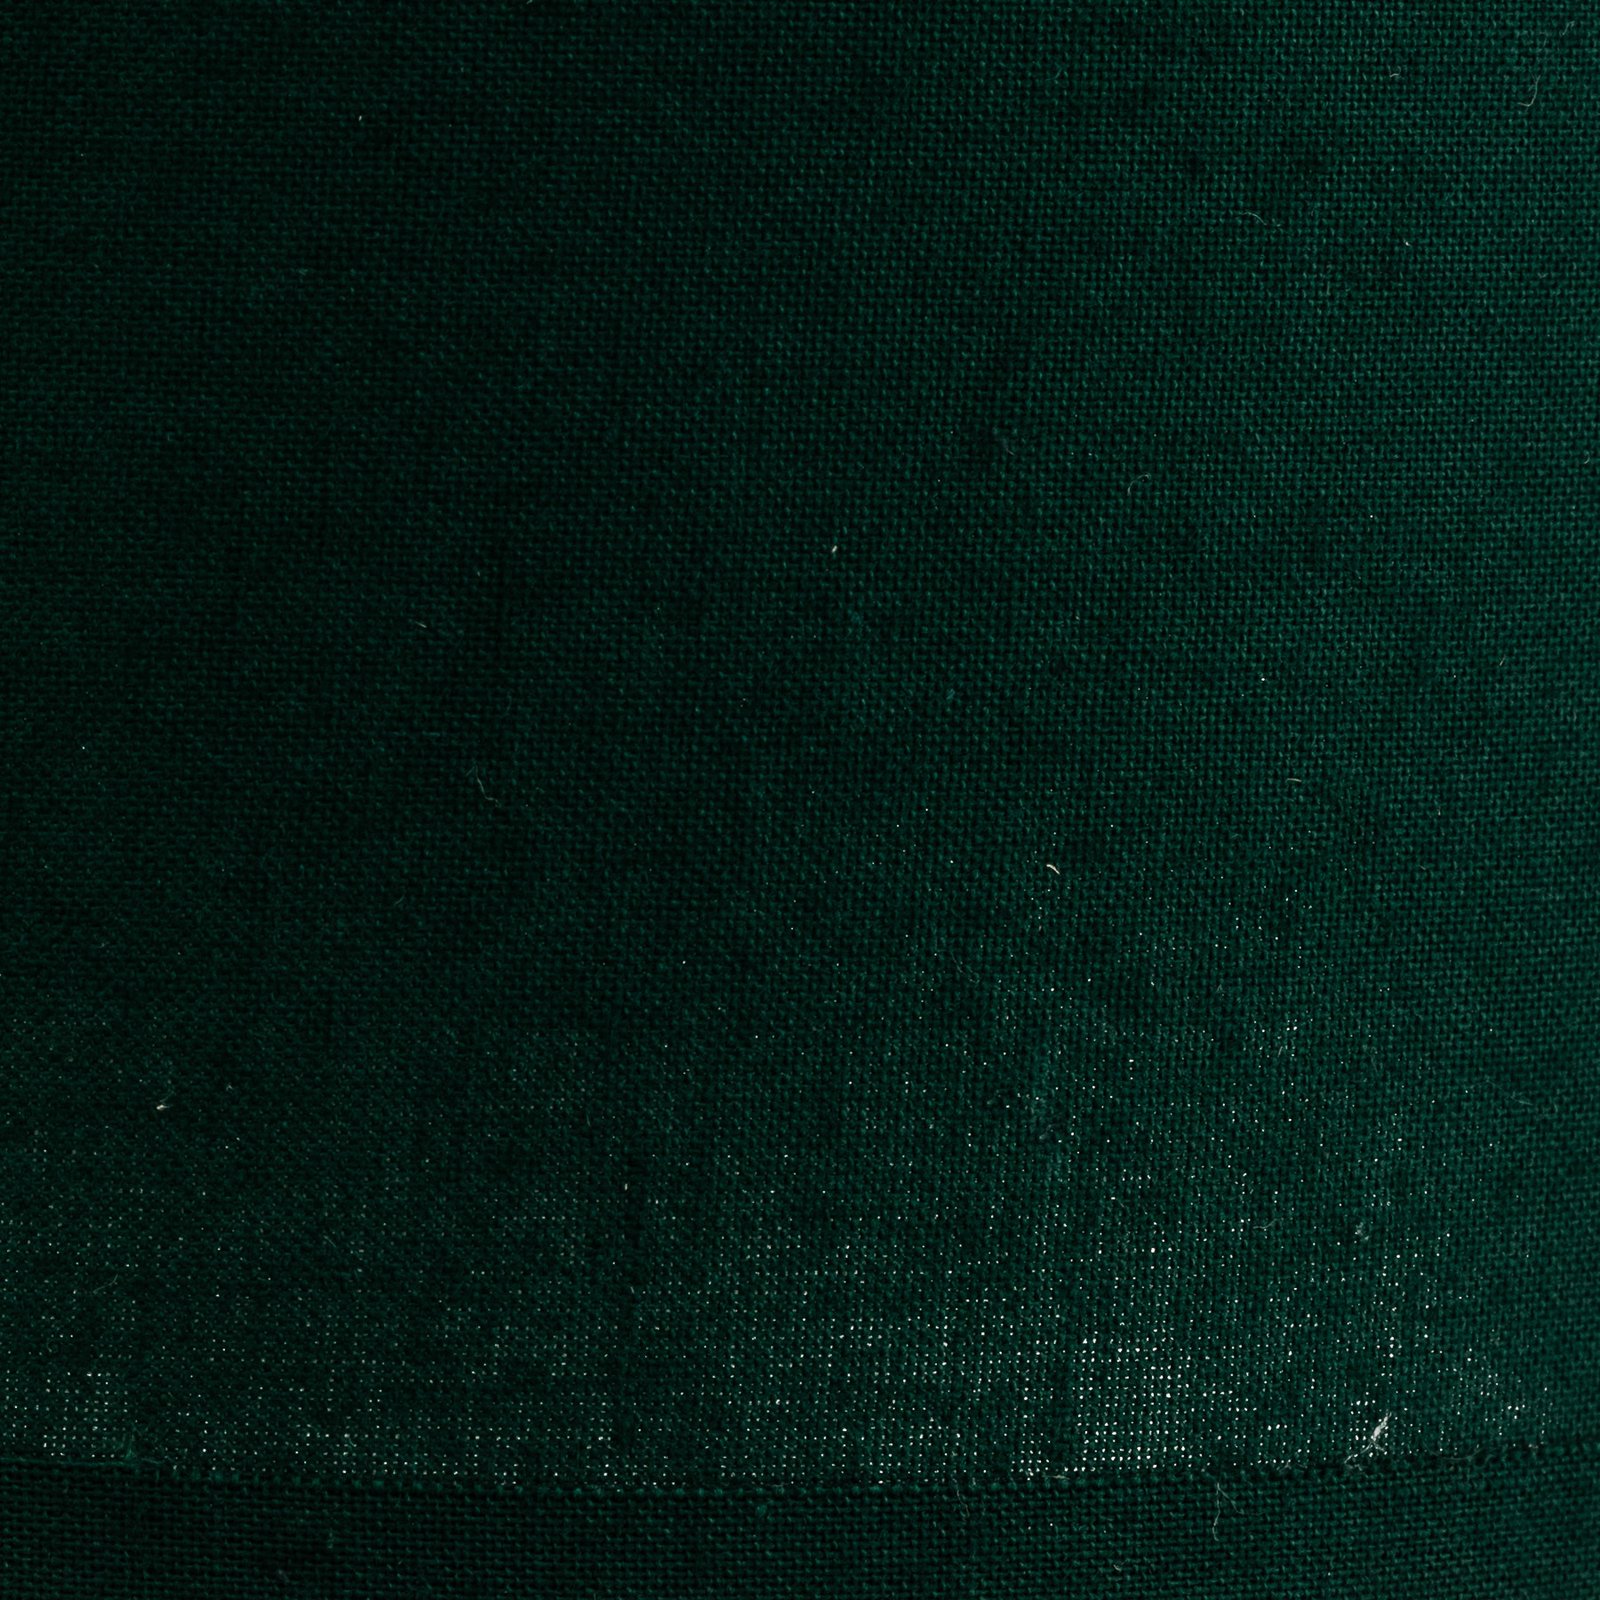 Stínidlo Roller, zelená, Ø 13 cm, výška 15 cm